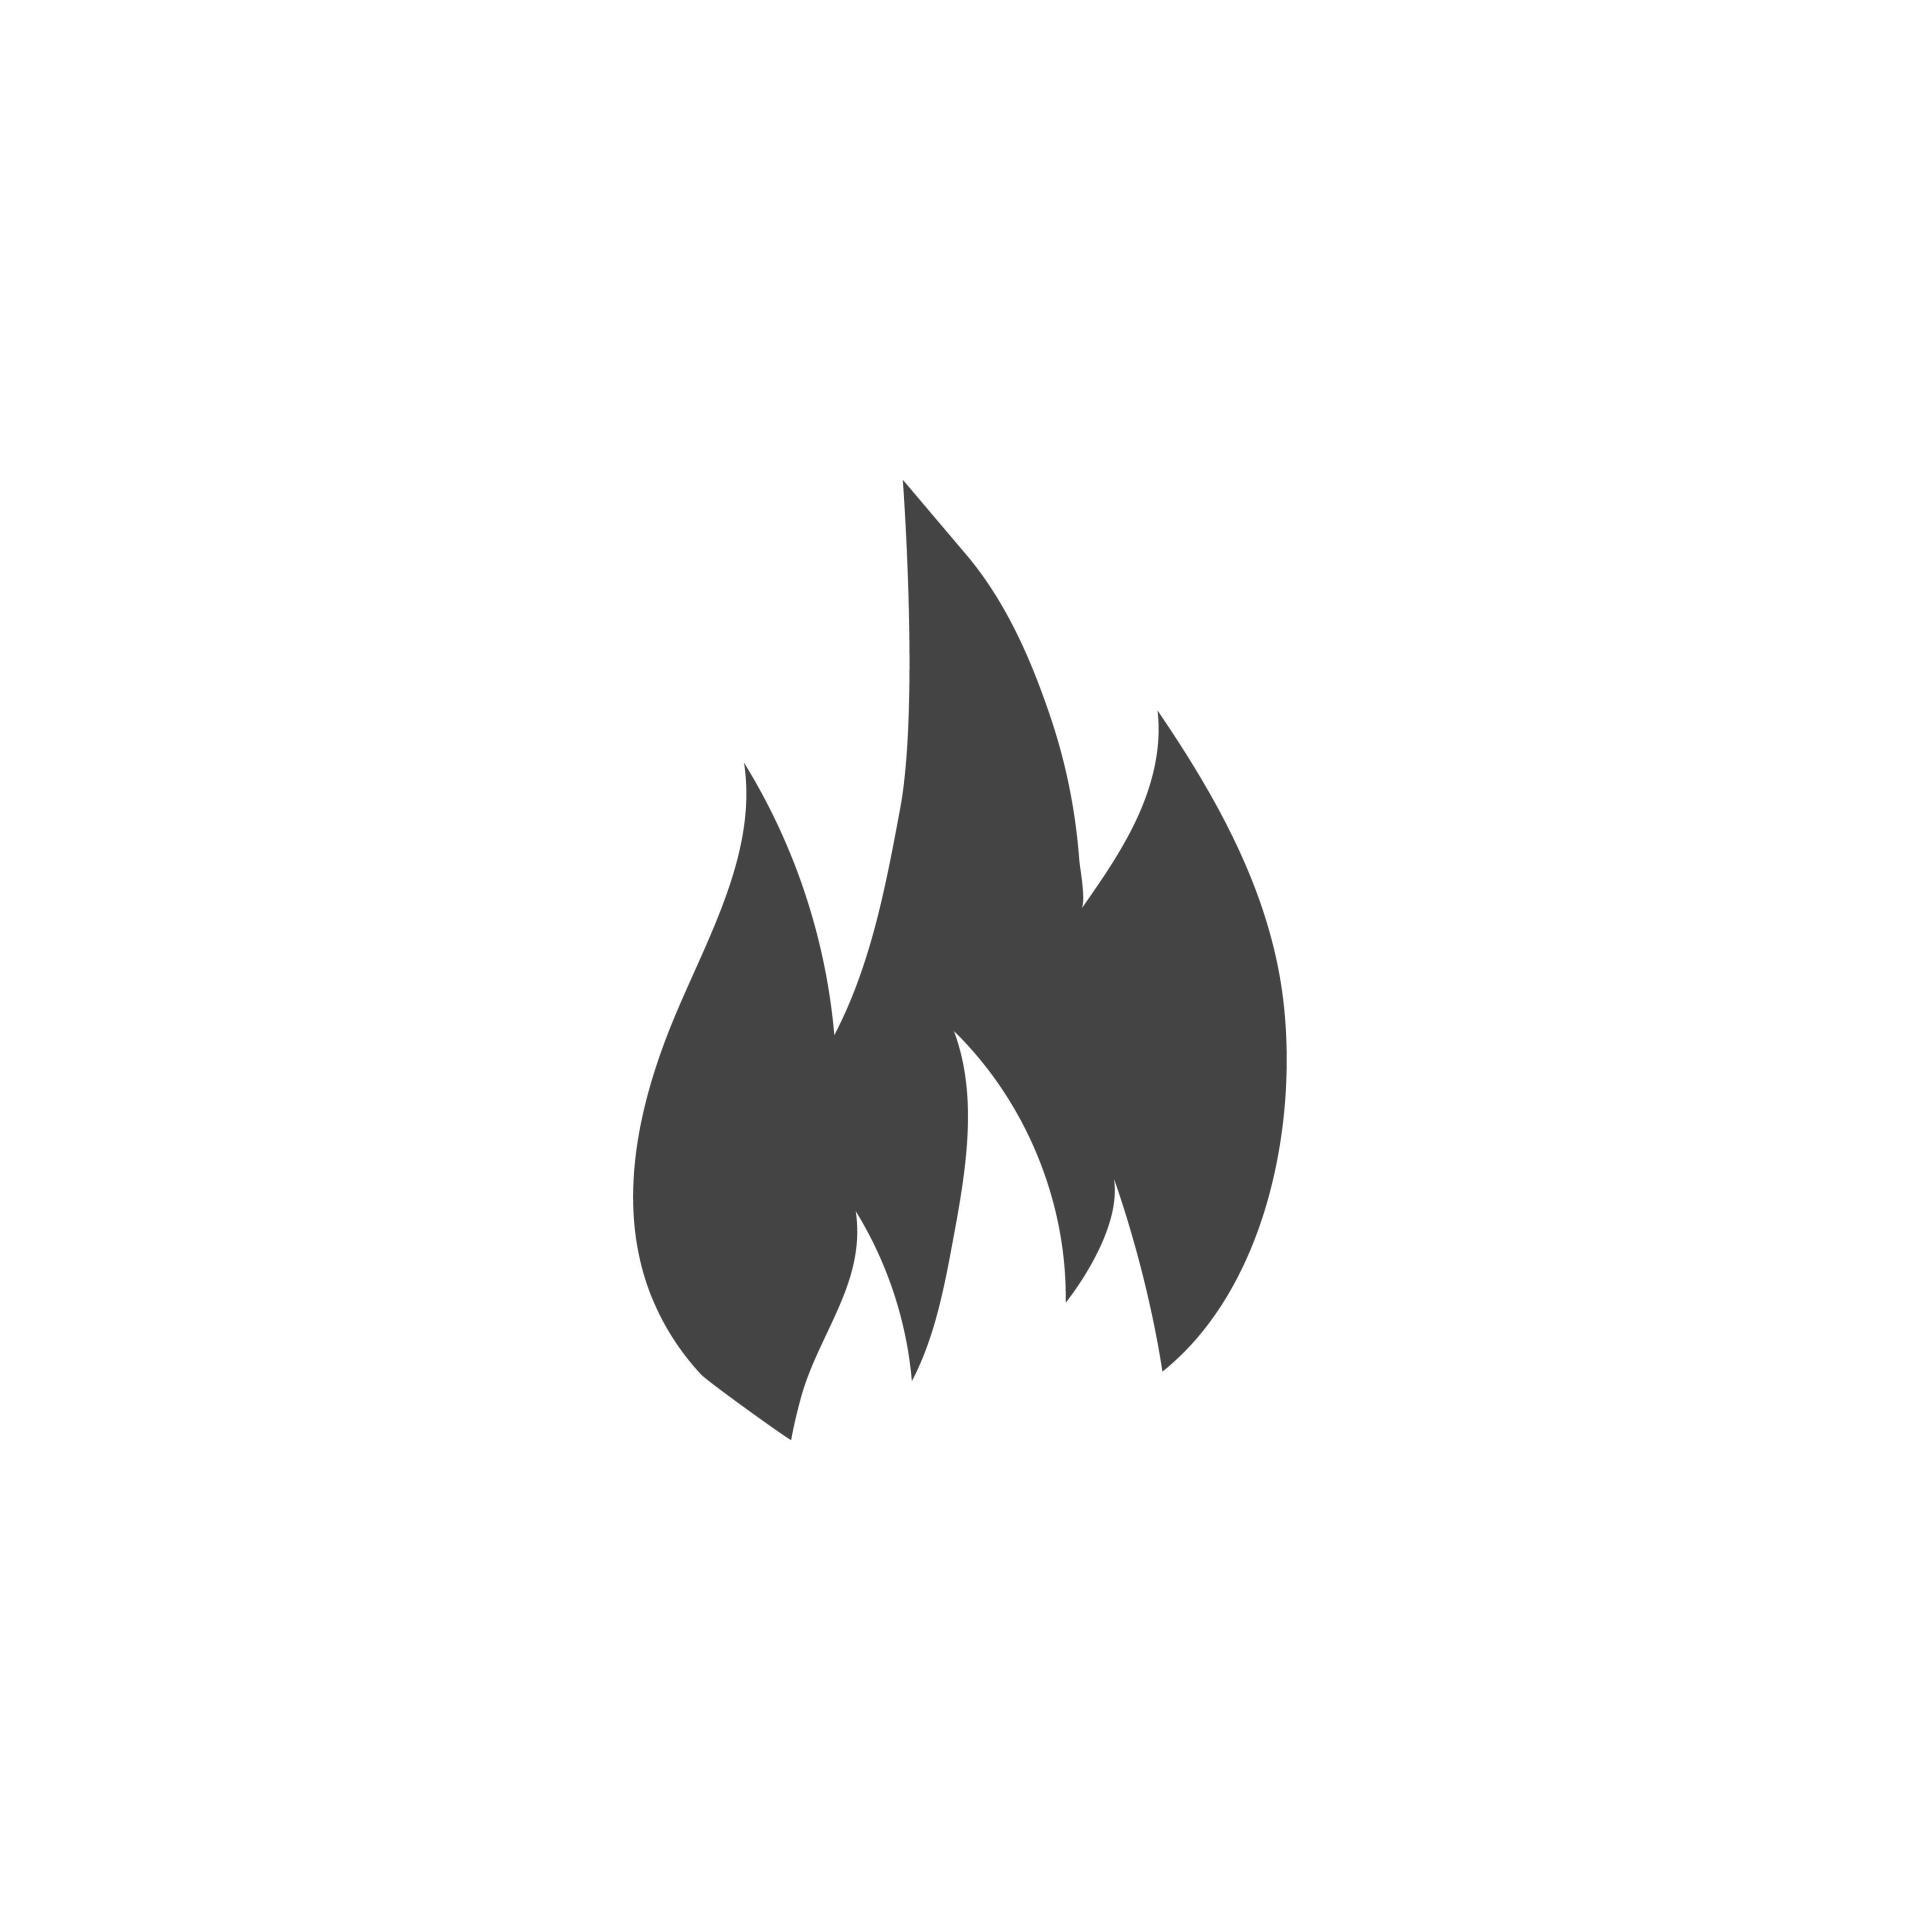 Furnace & Heater logo